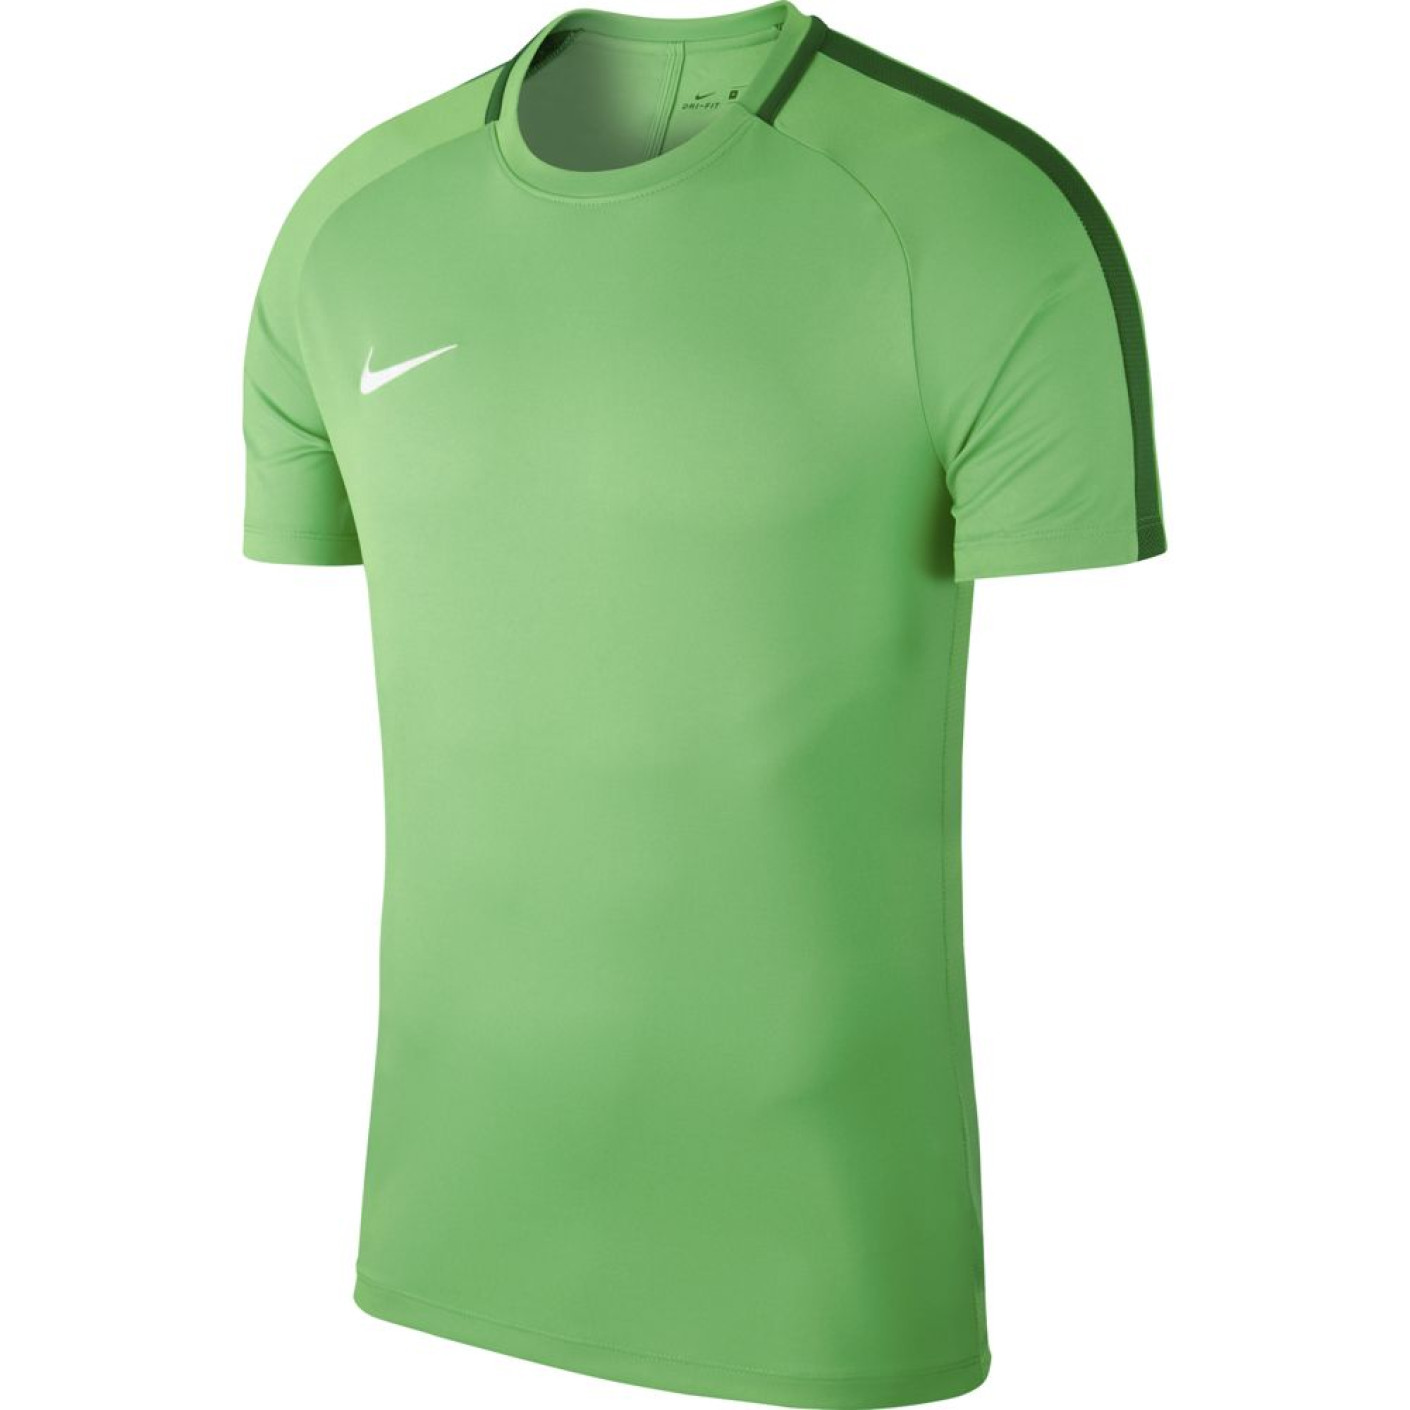 Nike Dry Academy 18 Shirt Kids Light Green